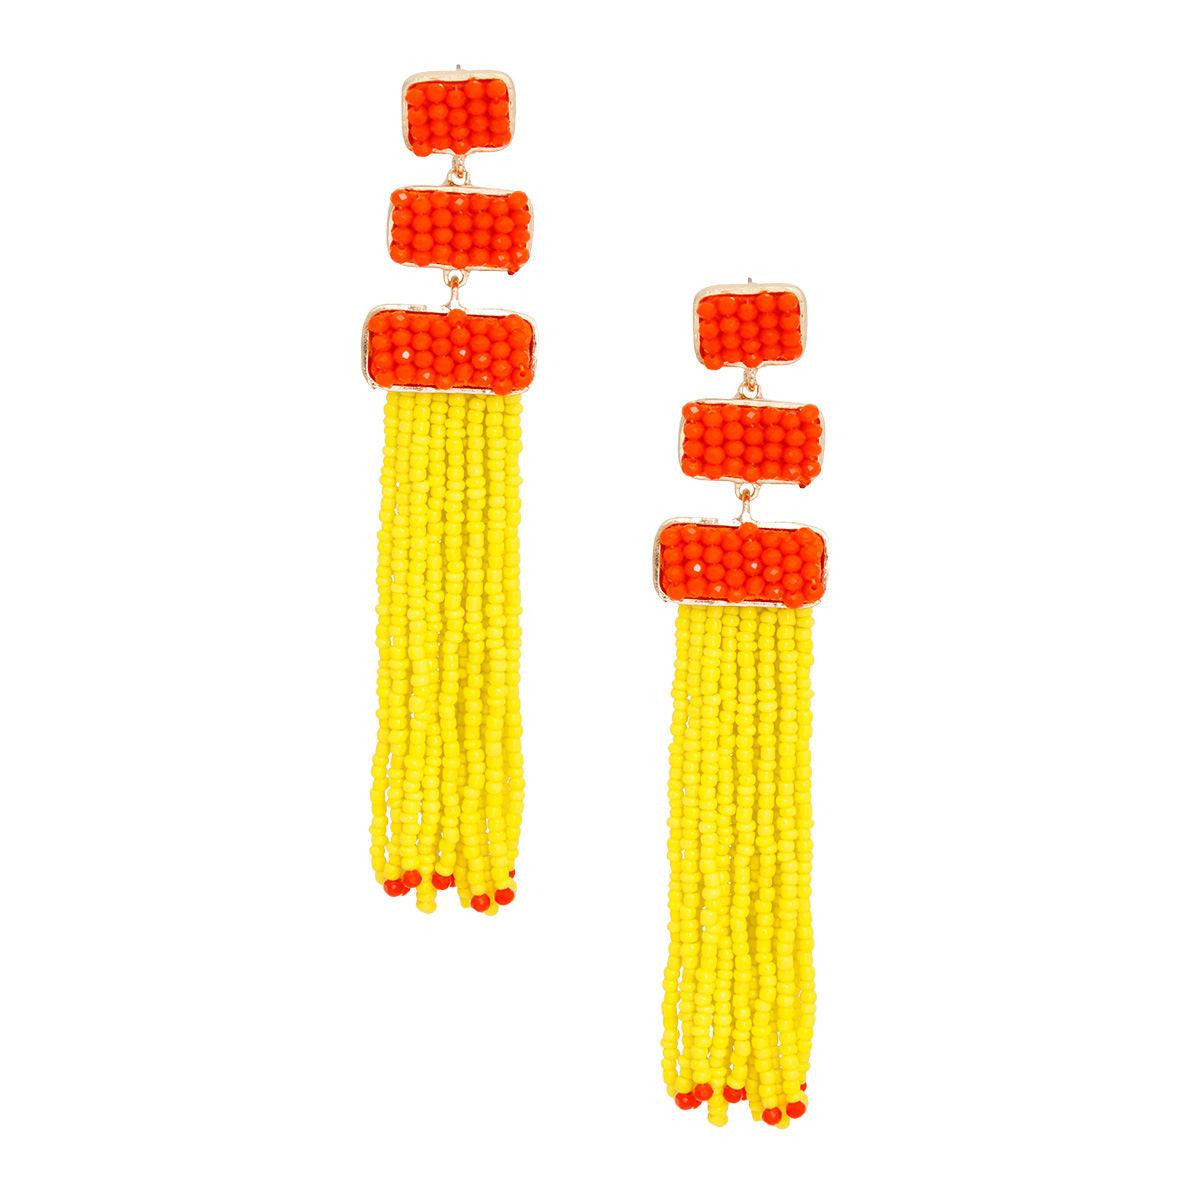 Chic Gold Rectangle & Orange Beaded Earrings - Yellow Tassel Drop